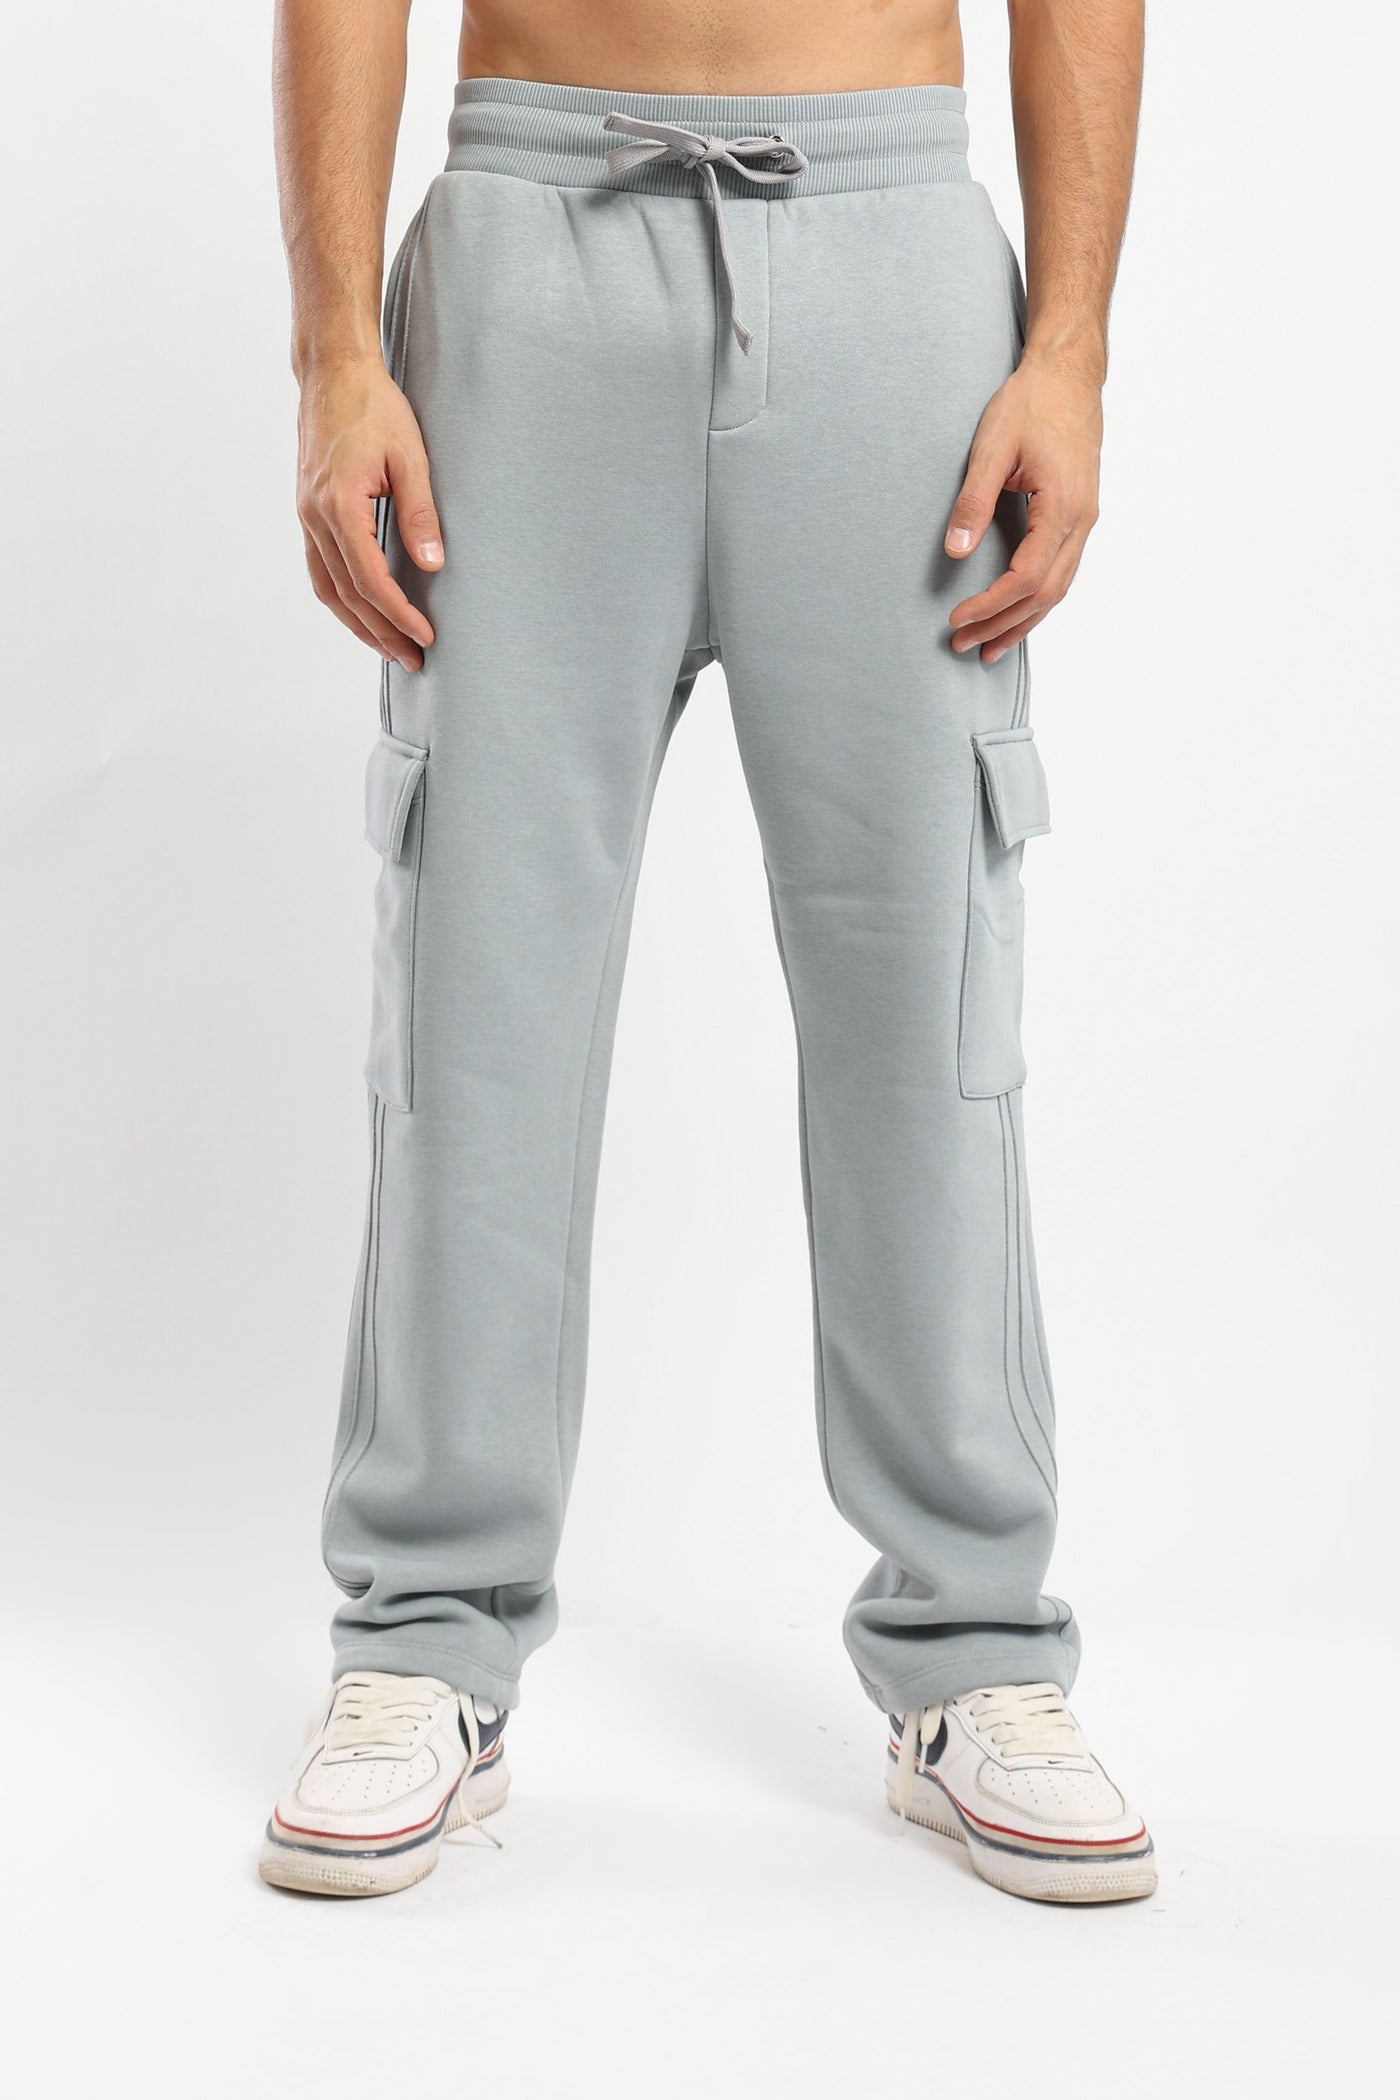 Pants - Side Panels - Side Flap Pockets